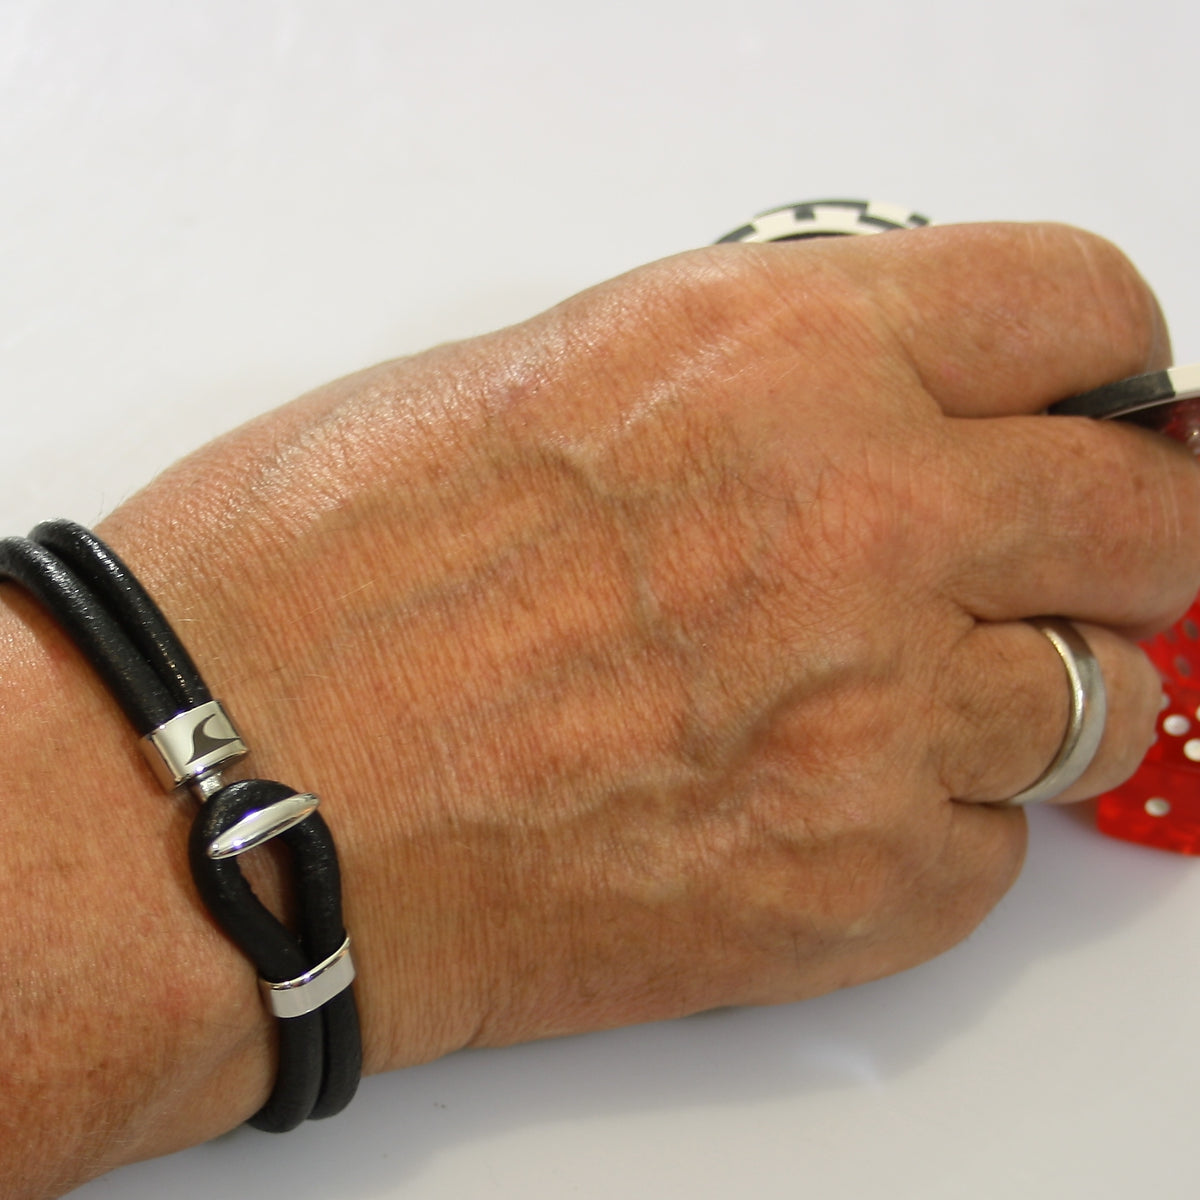 Herren-Leder-Armband-Aruba-schwarz-massiv-Edelstahlverschluss-getragen-wavepirate-shop-r